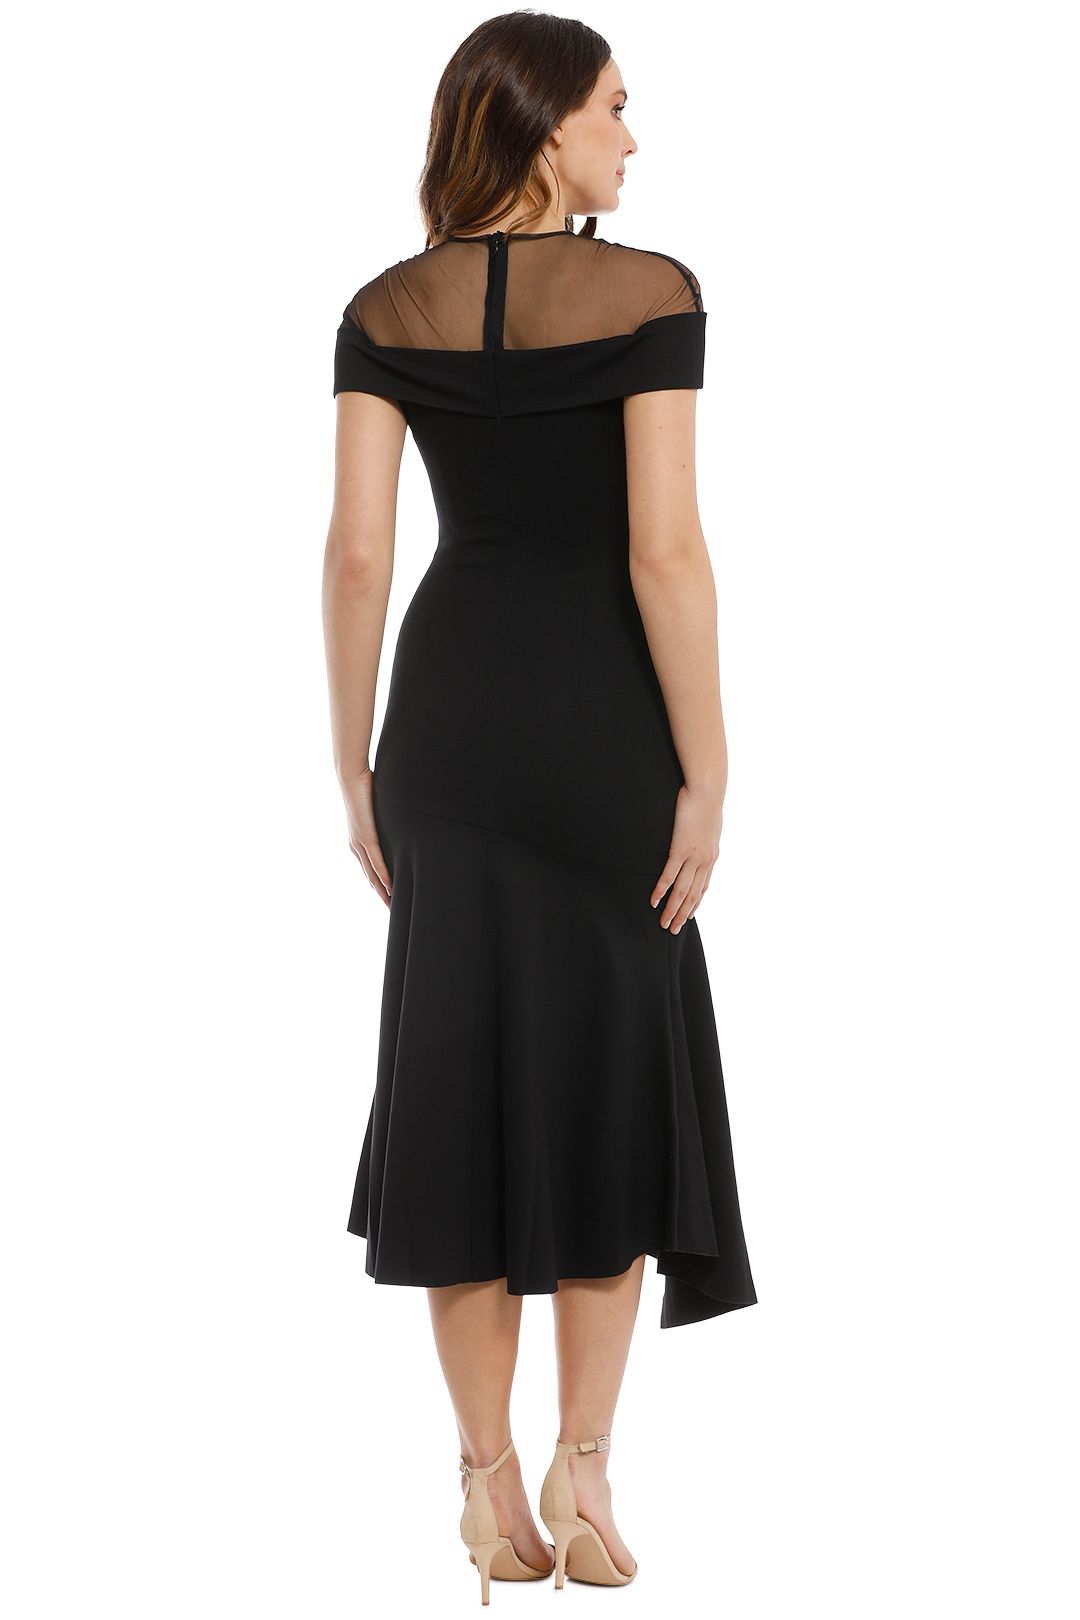 Elliatt - Martini Dress - Black - Back